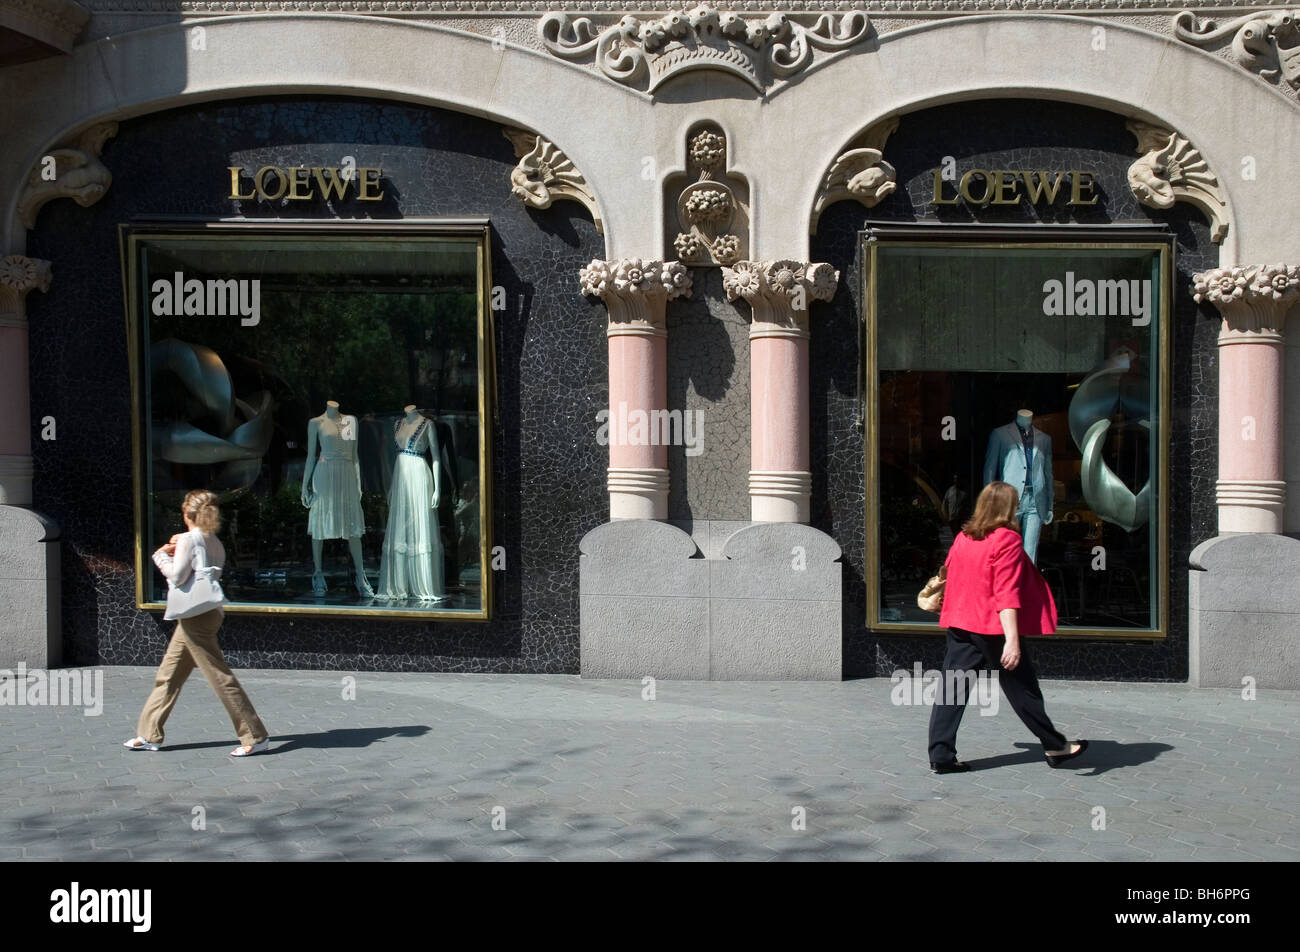 Loewe shop window at Passeig de Gracia.Barcelona. Catalonia. Spain. Stock Photo